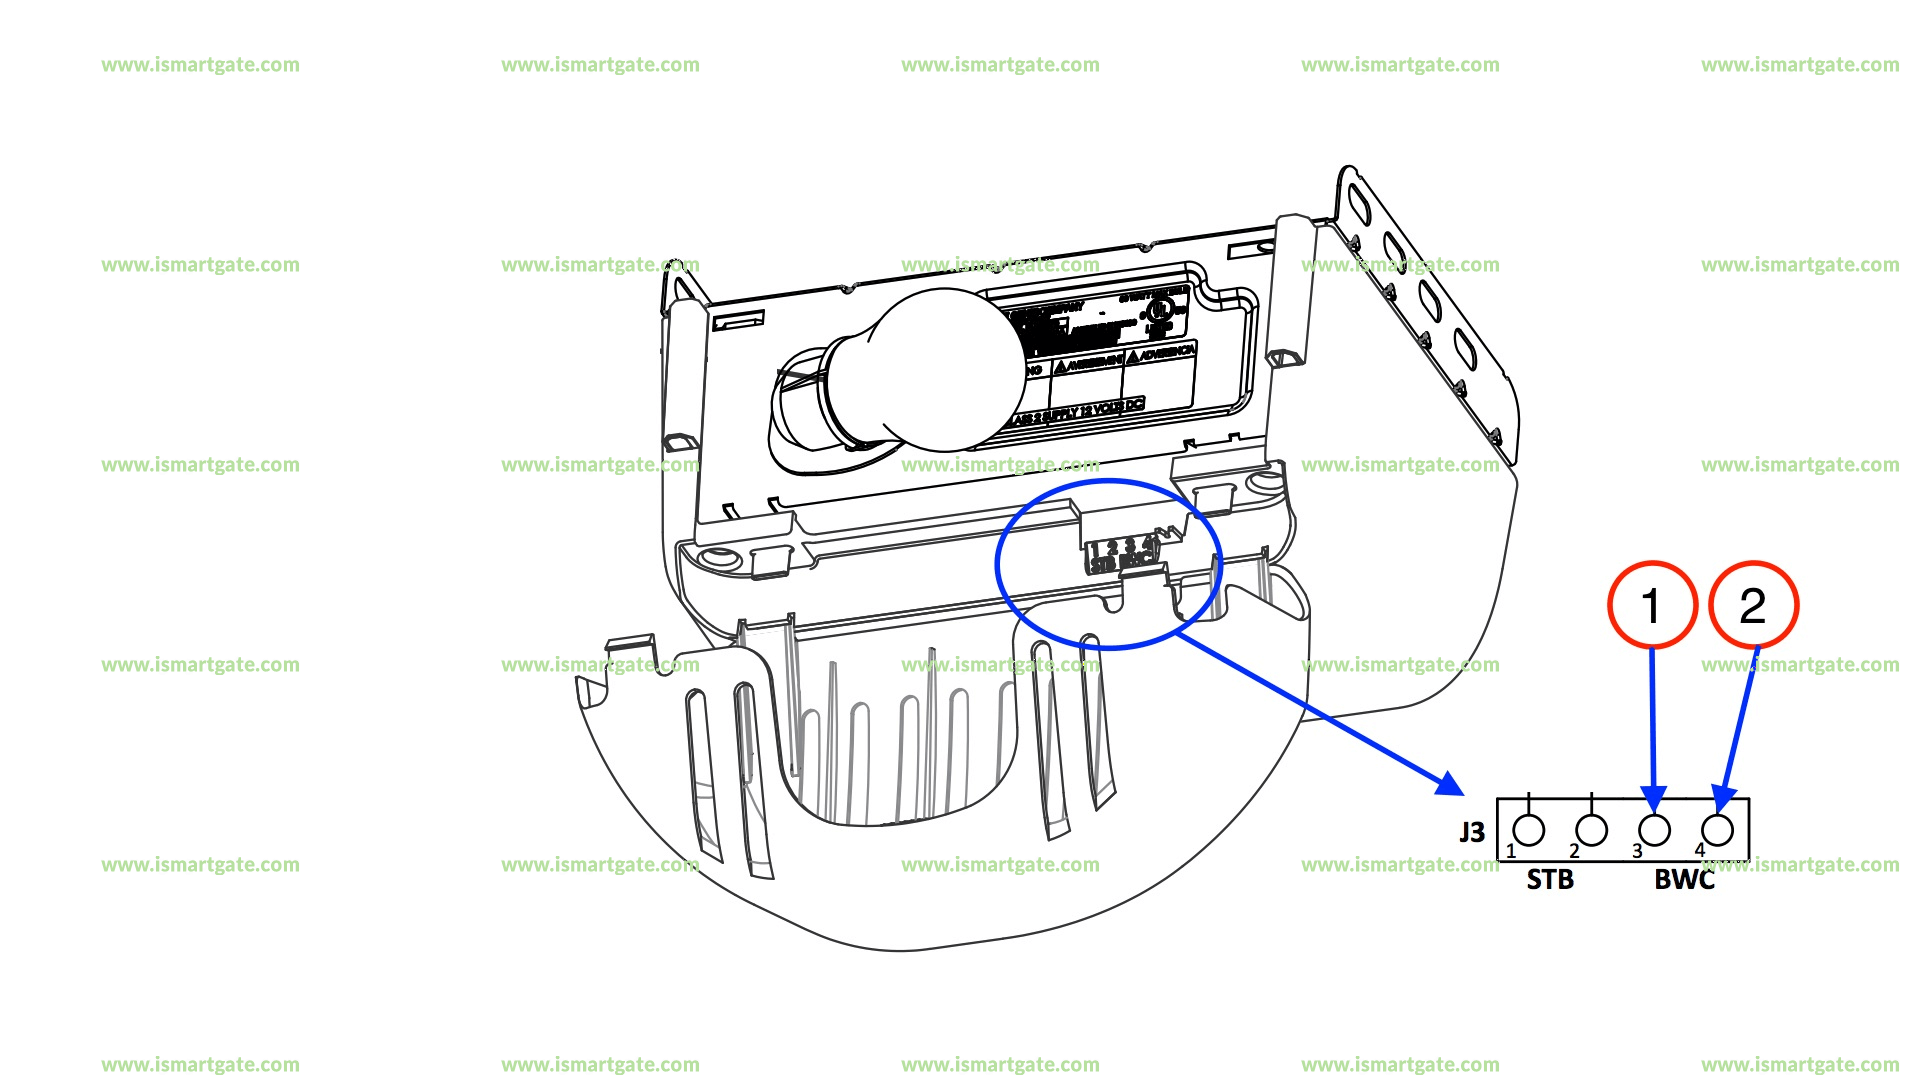 Wiring diagram for GENIE MODEL 1028